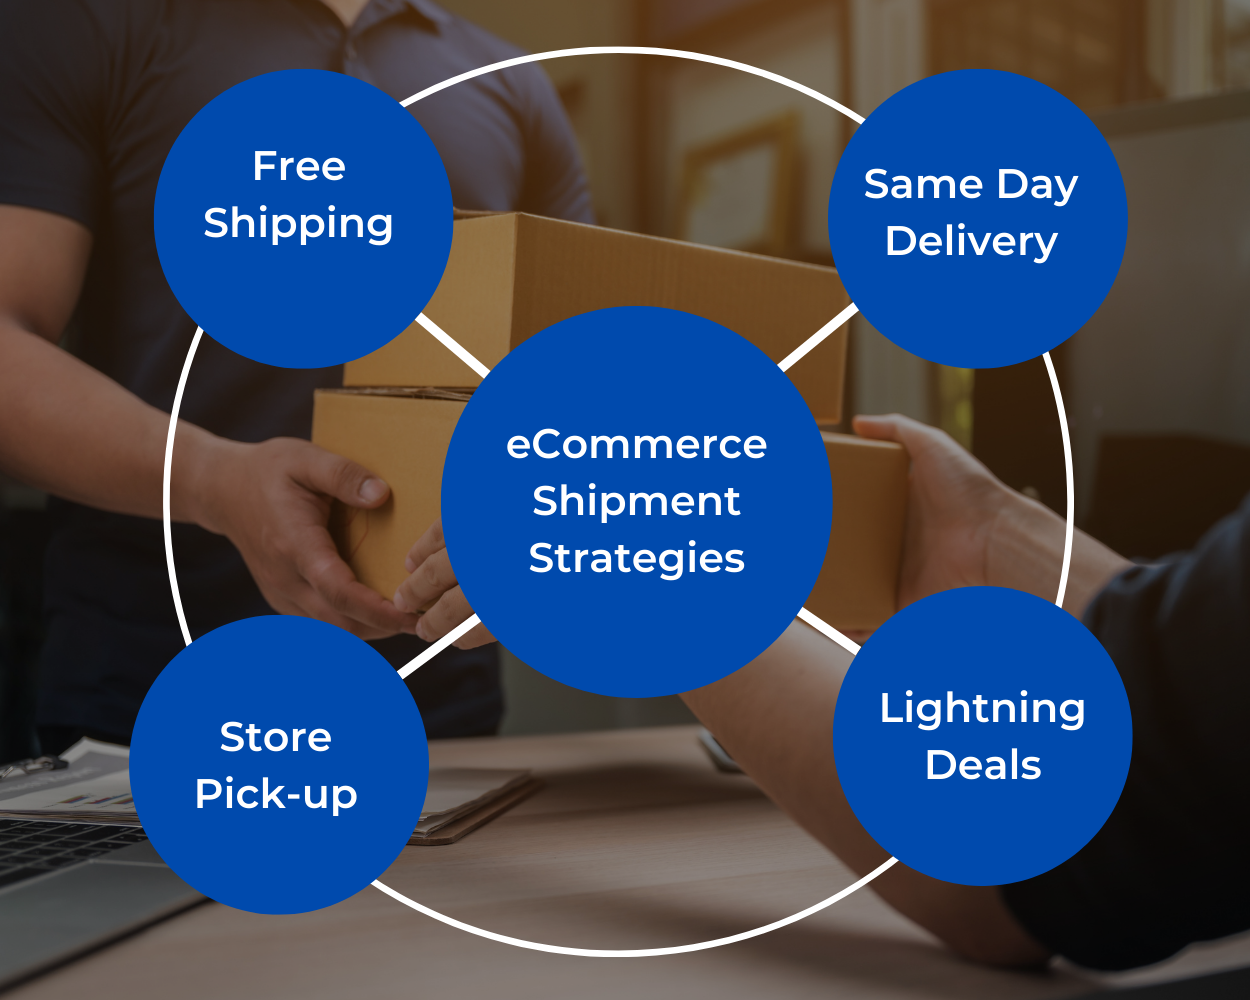 eCommerce Shipment Strategies